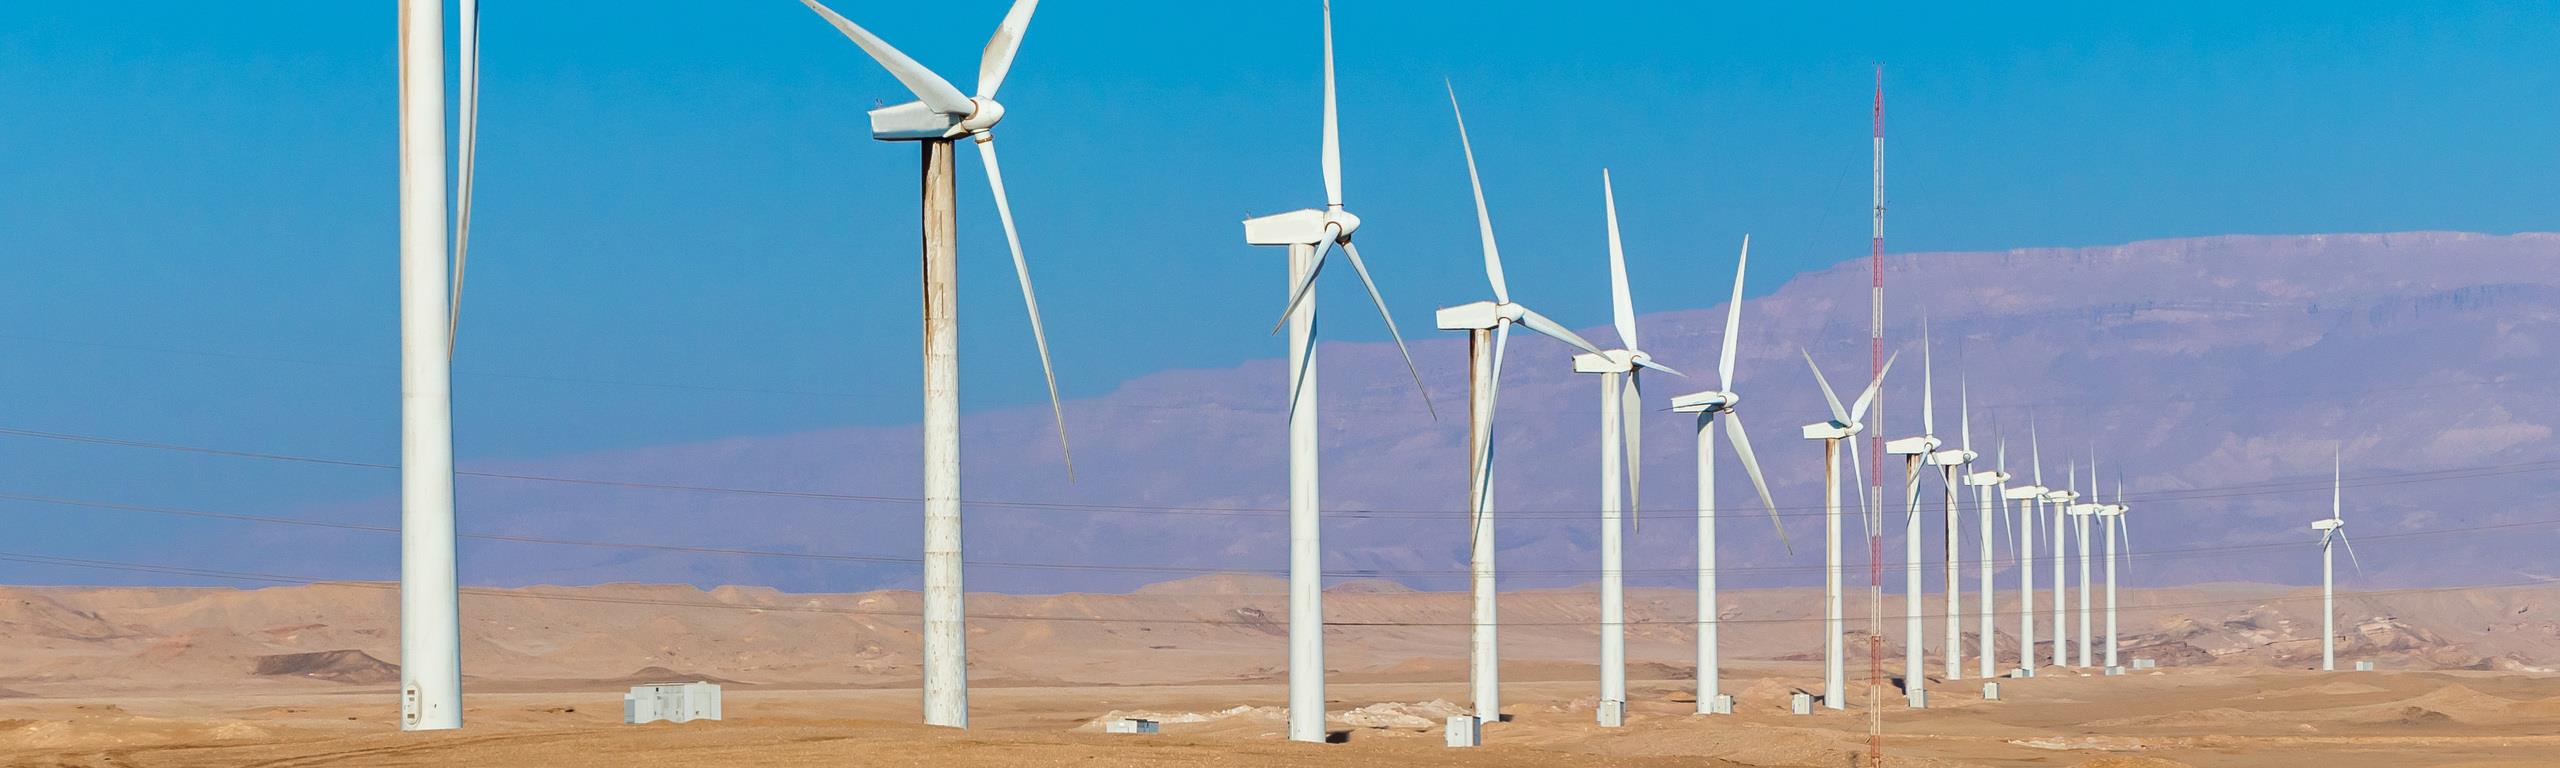 A wind farm in Egypt